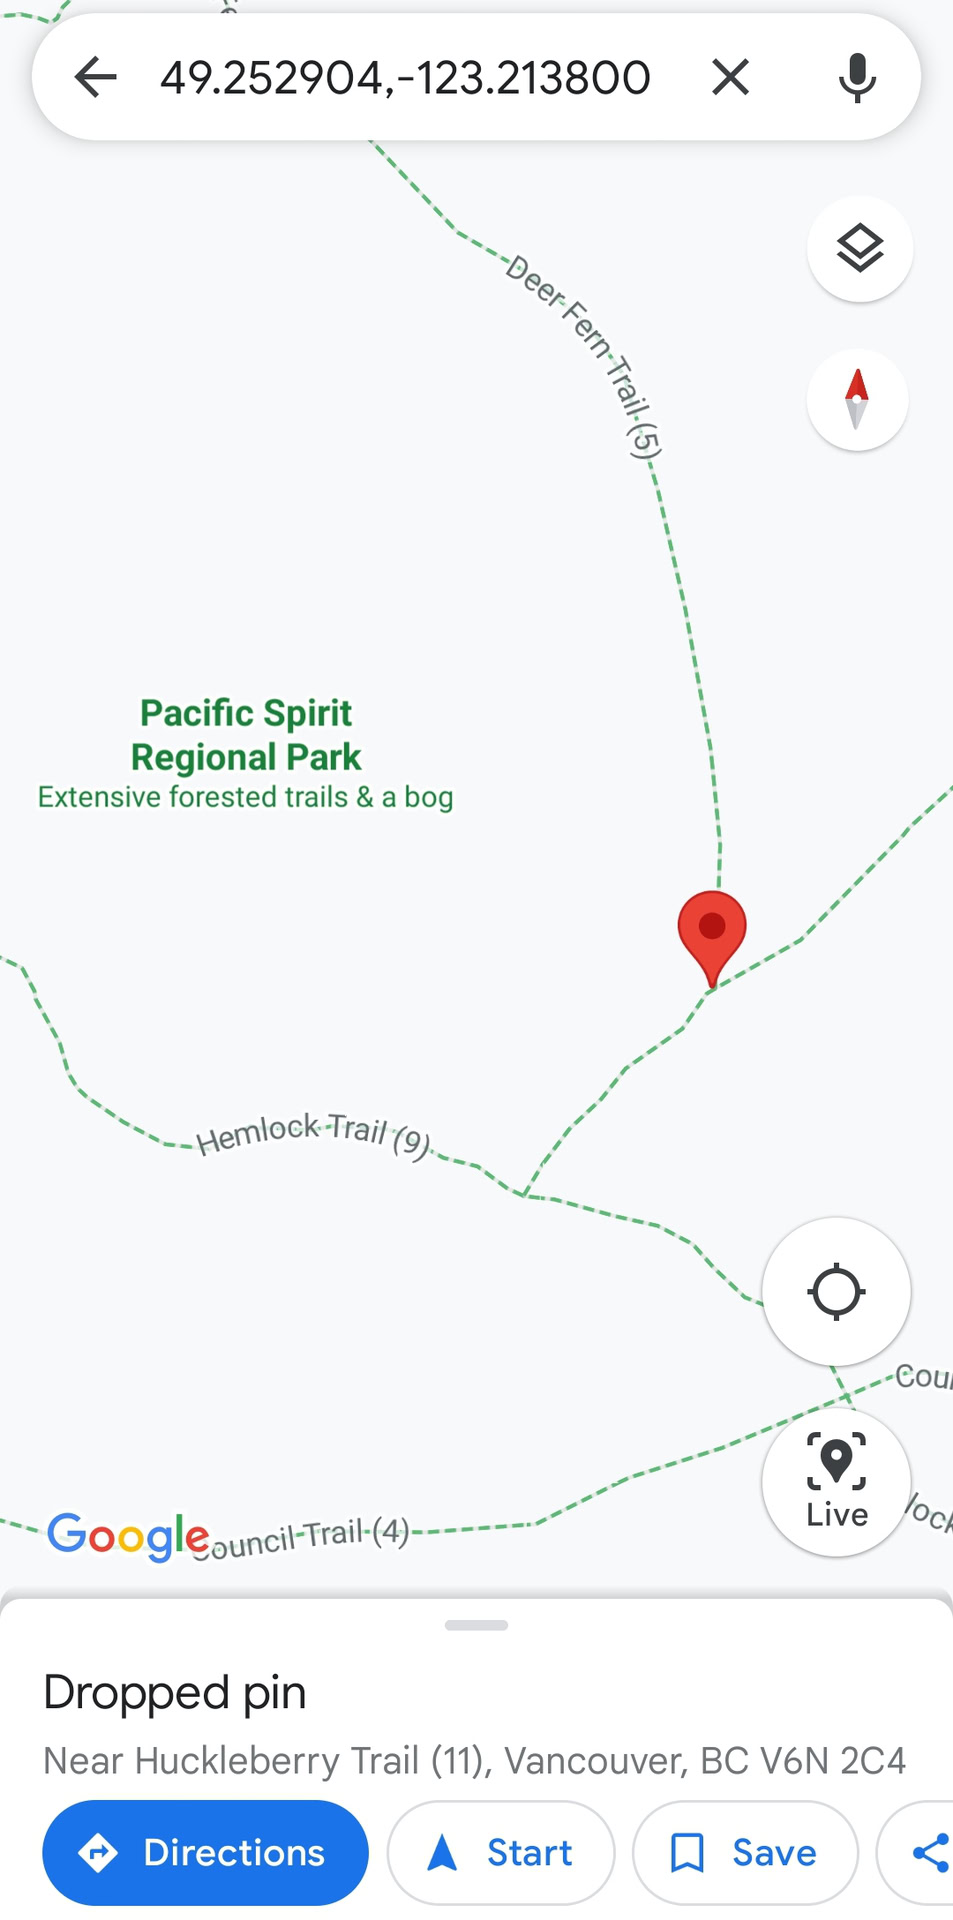 Google Maps dropped pin